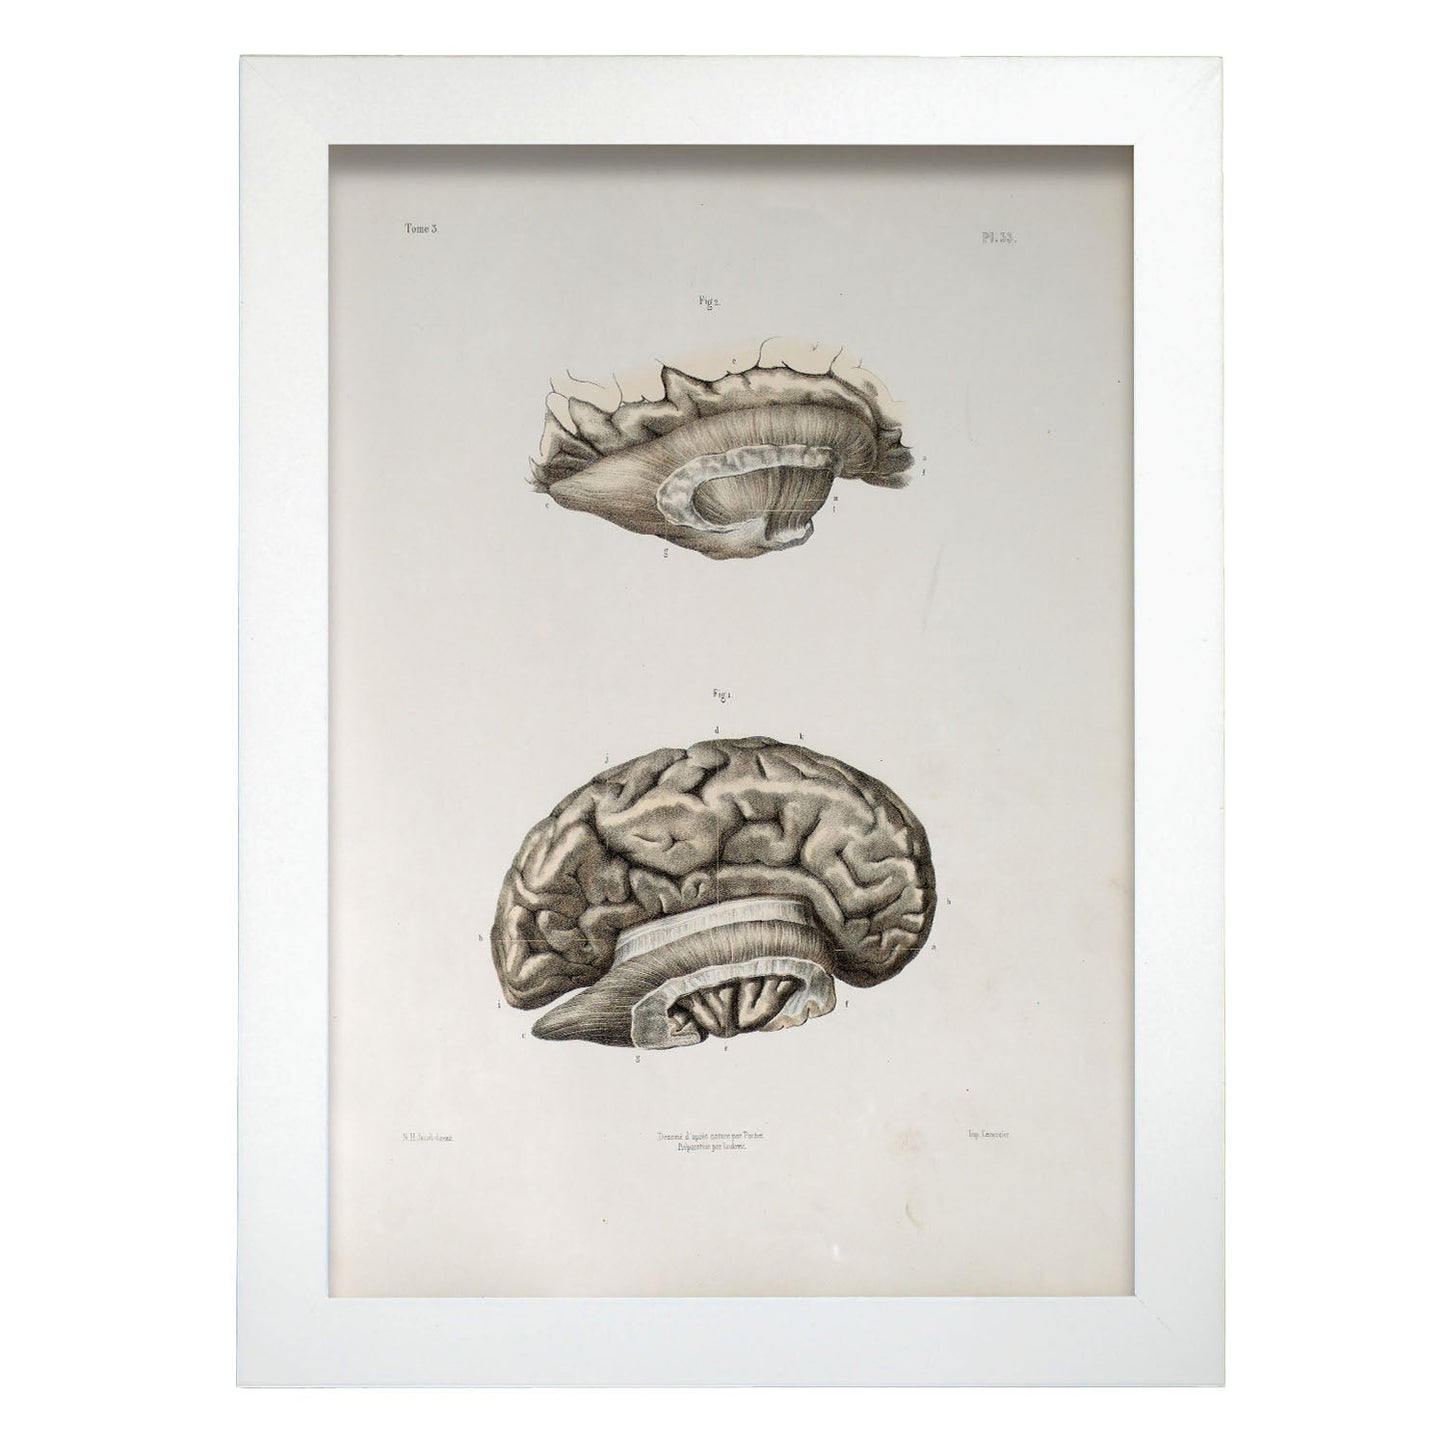 Brain divided in parasagital section-Artwork-Nacnic-A4-Marco Blanco-Nacnic Estudio SL